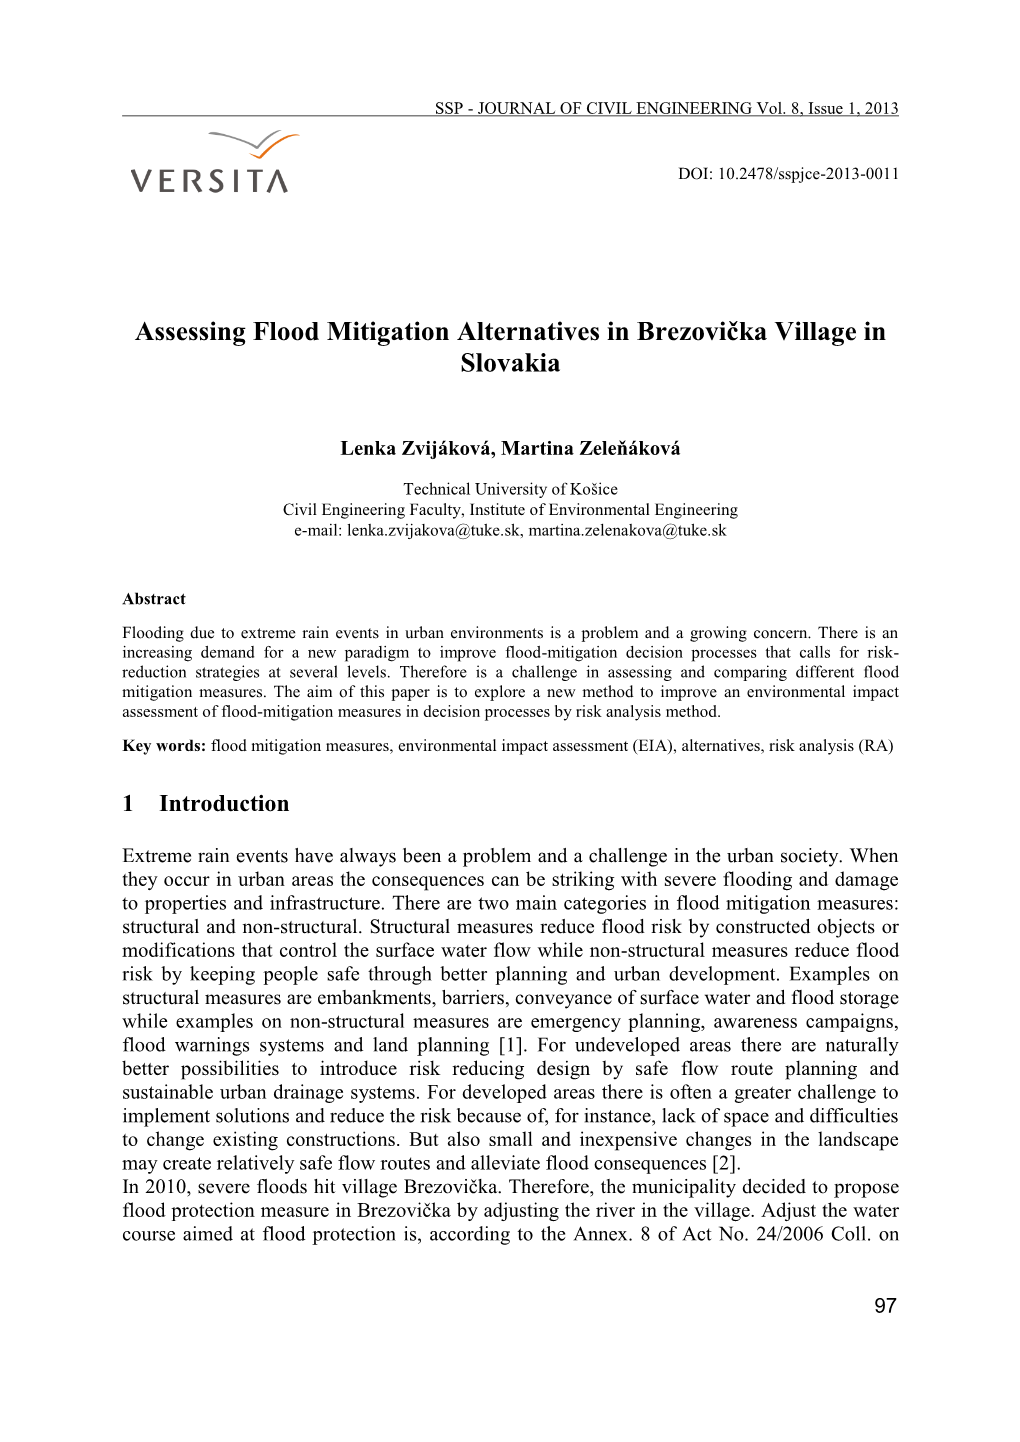 Assessing Flood Mitigation Alternatives in Brezovička Village in Slovakia